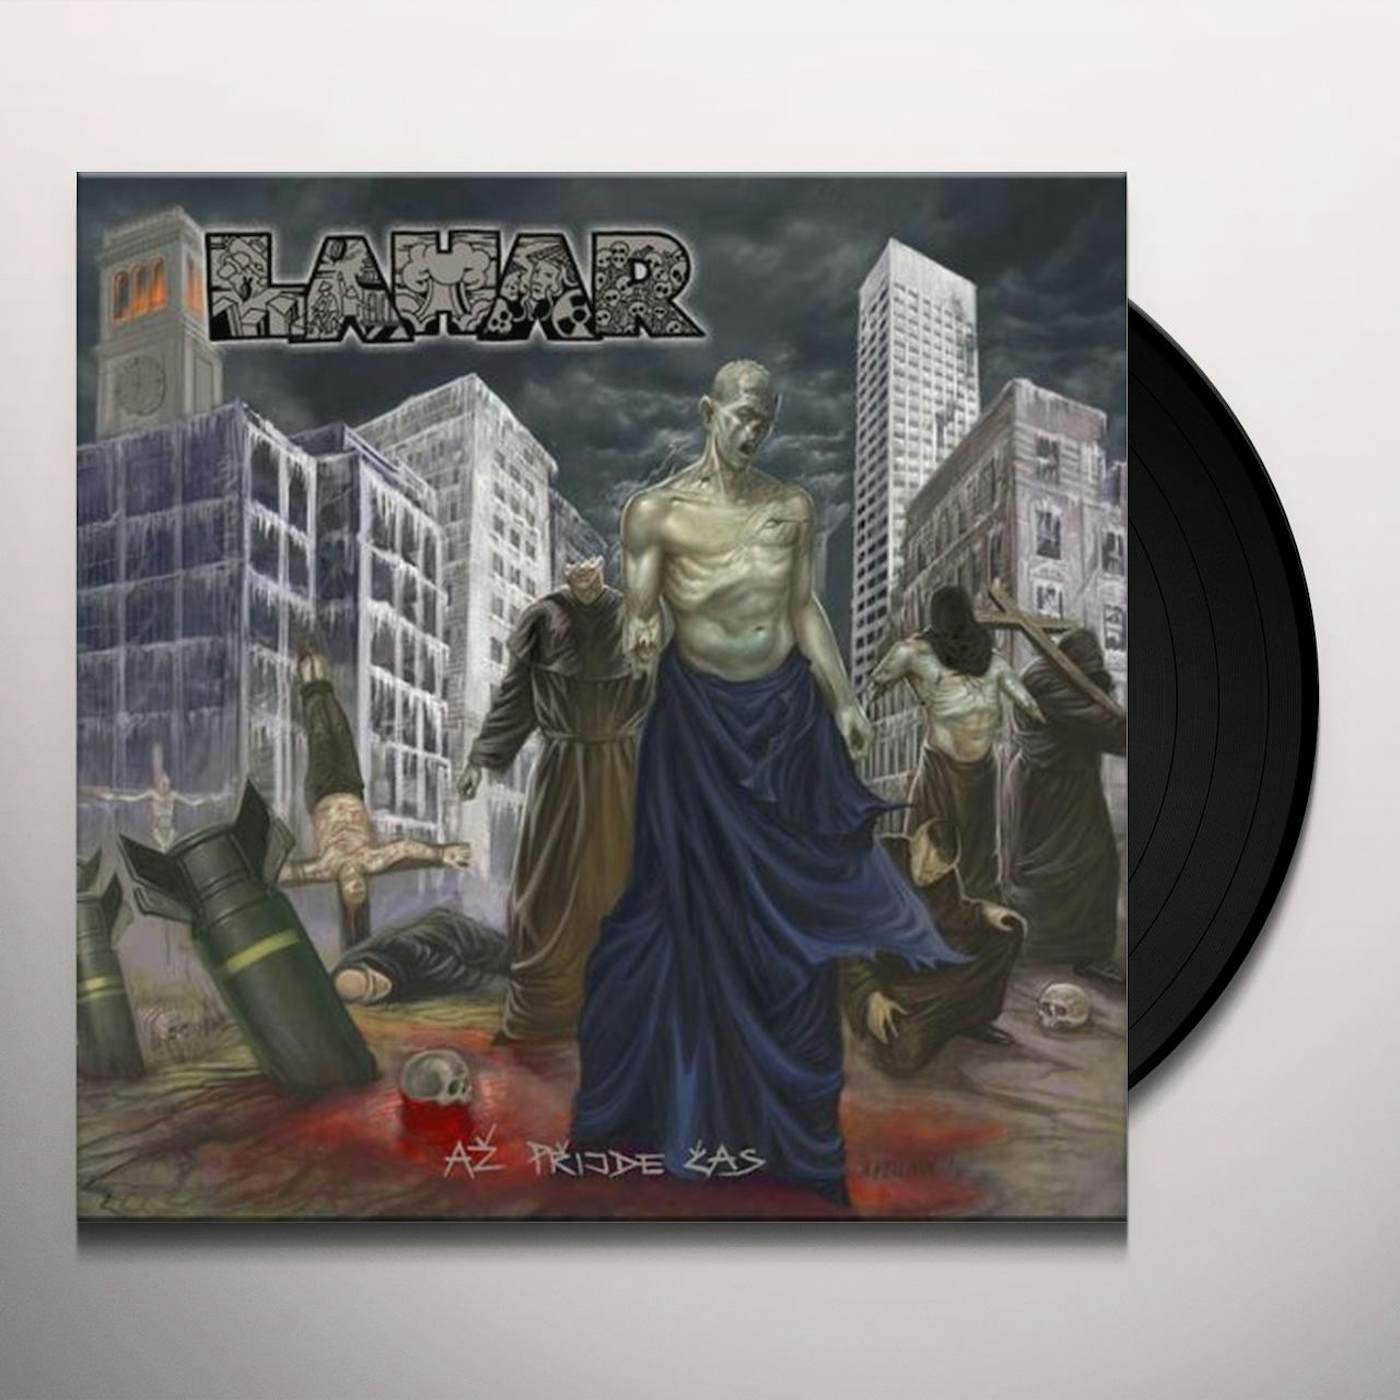 Lahar AZ PRIJDE CAS Vinyl Record